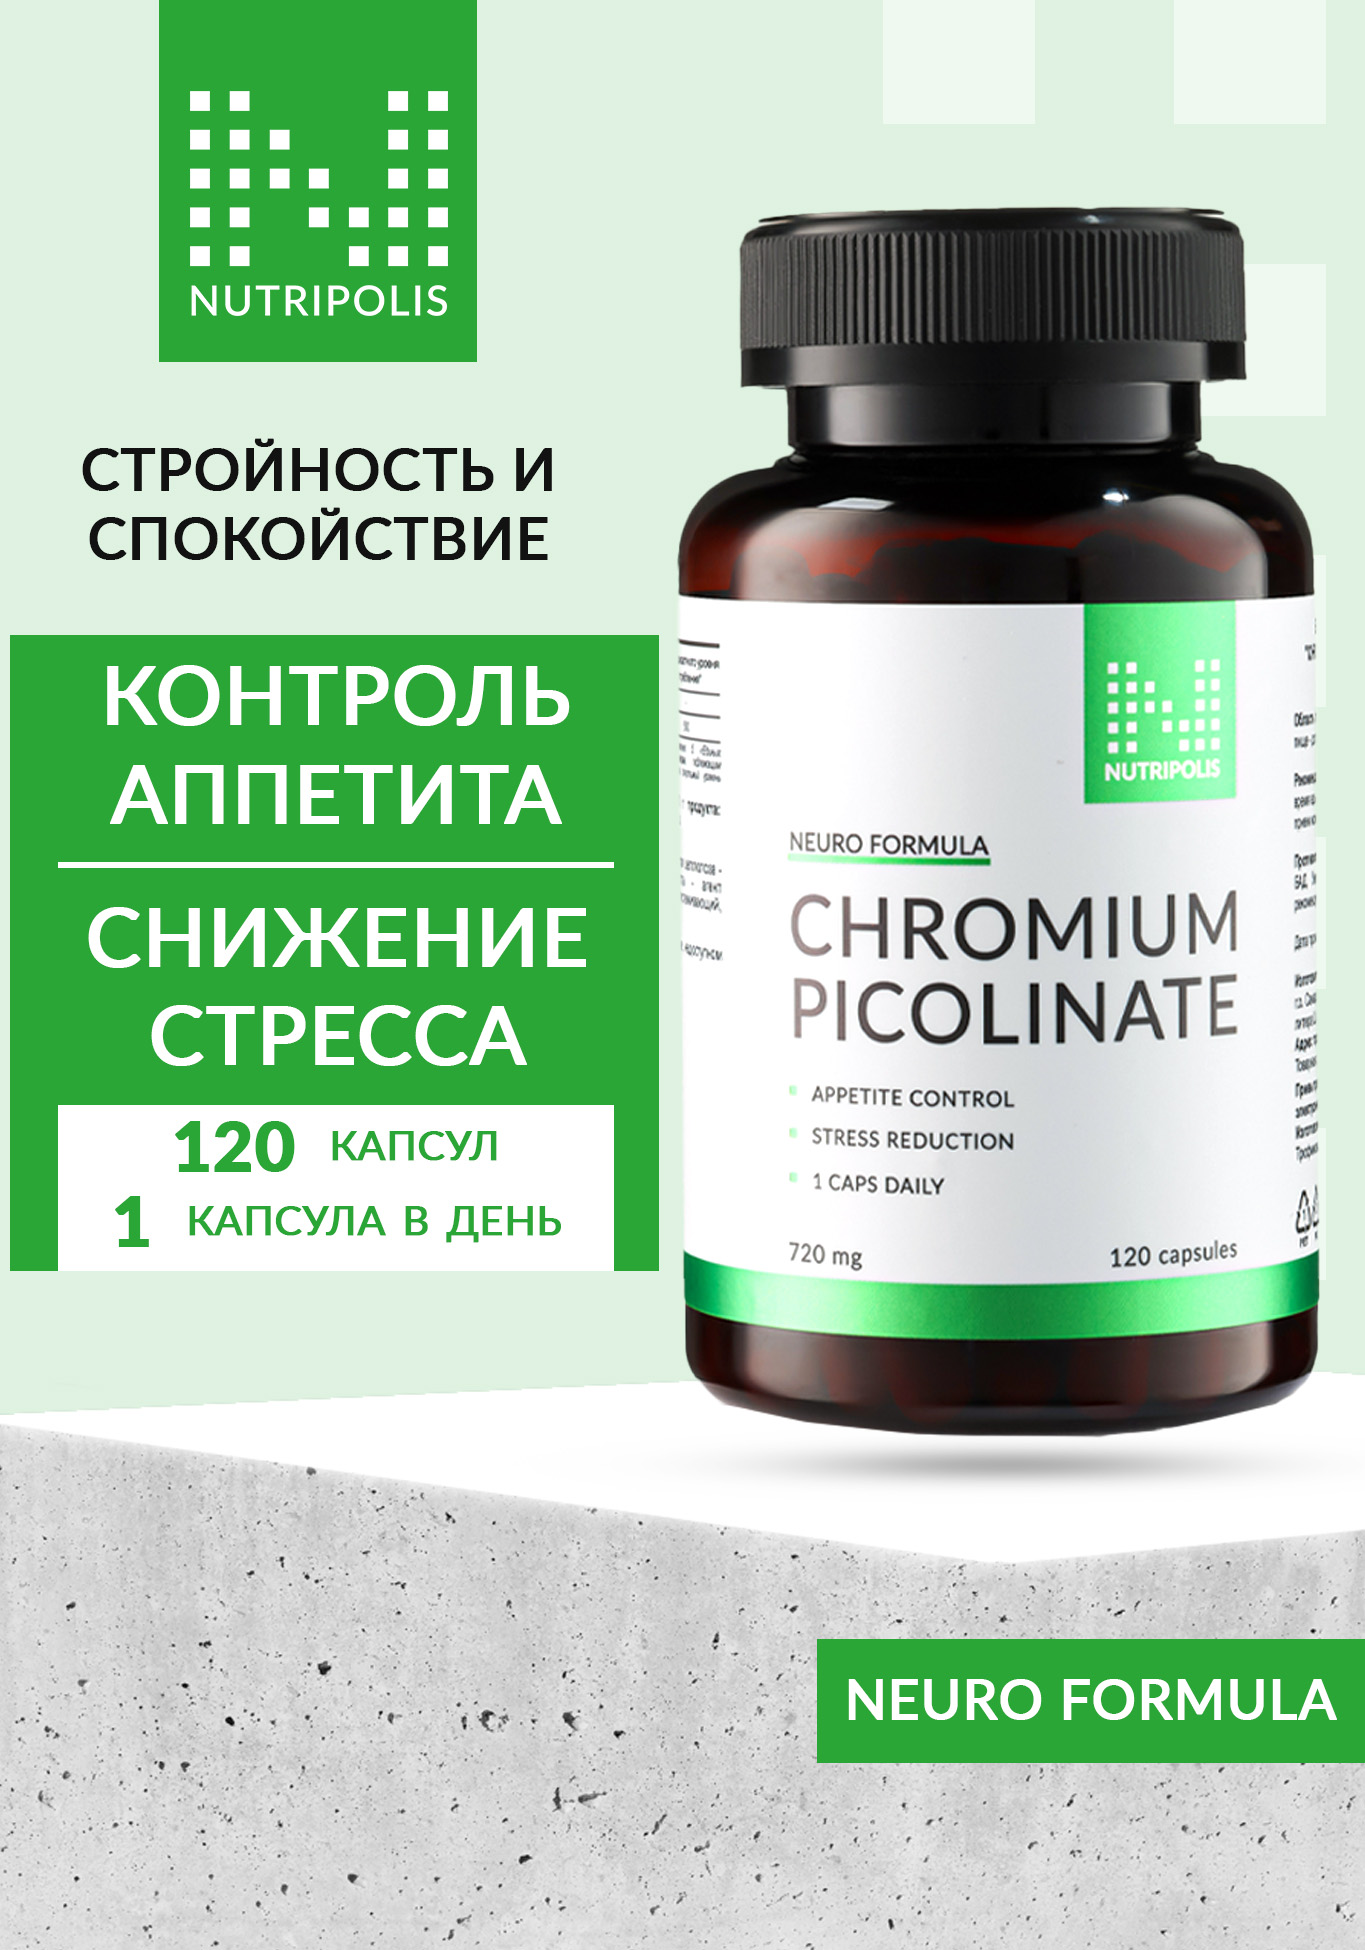 Chromium picolinate (Пиколинат хрома) NUTRIPOLIS - фото 1